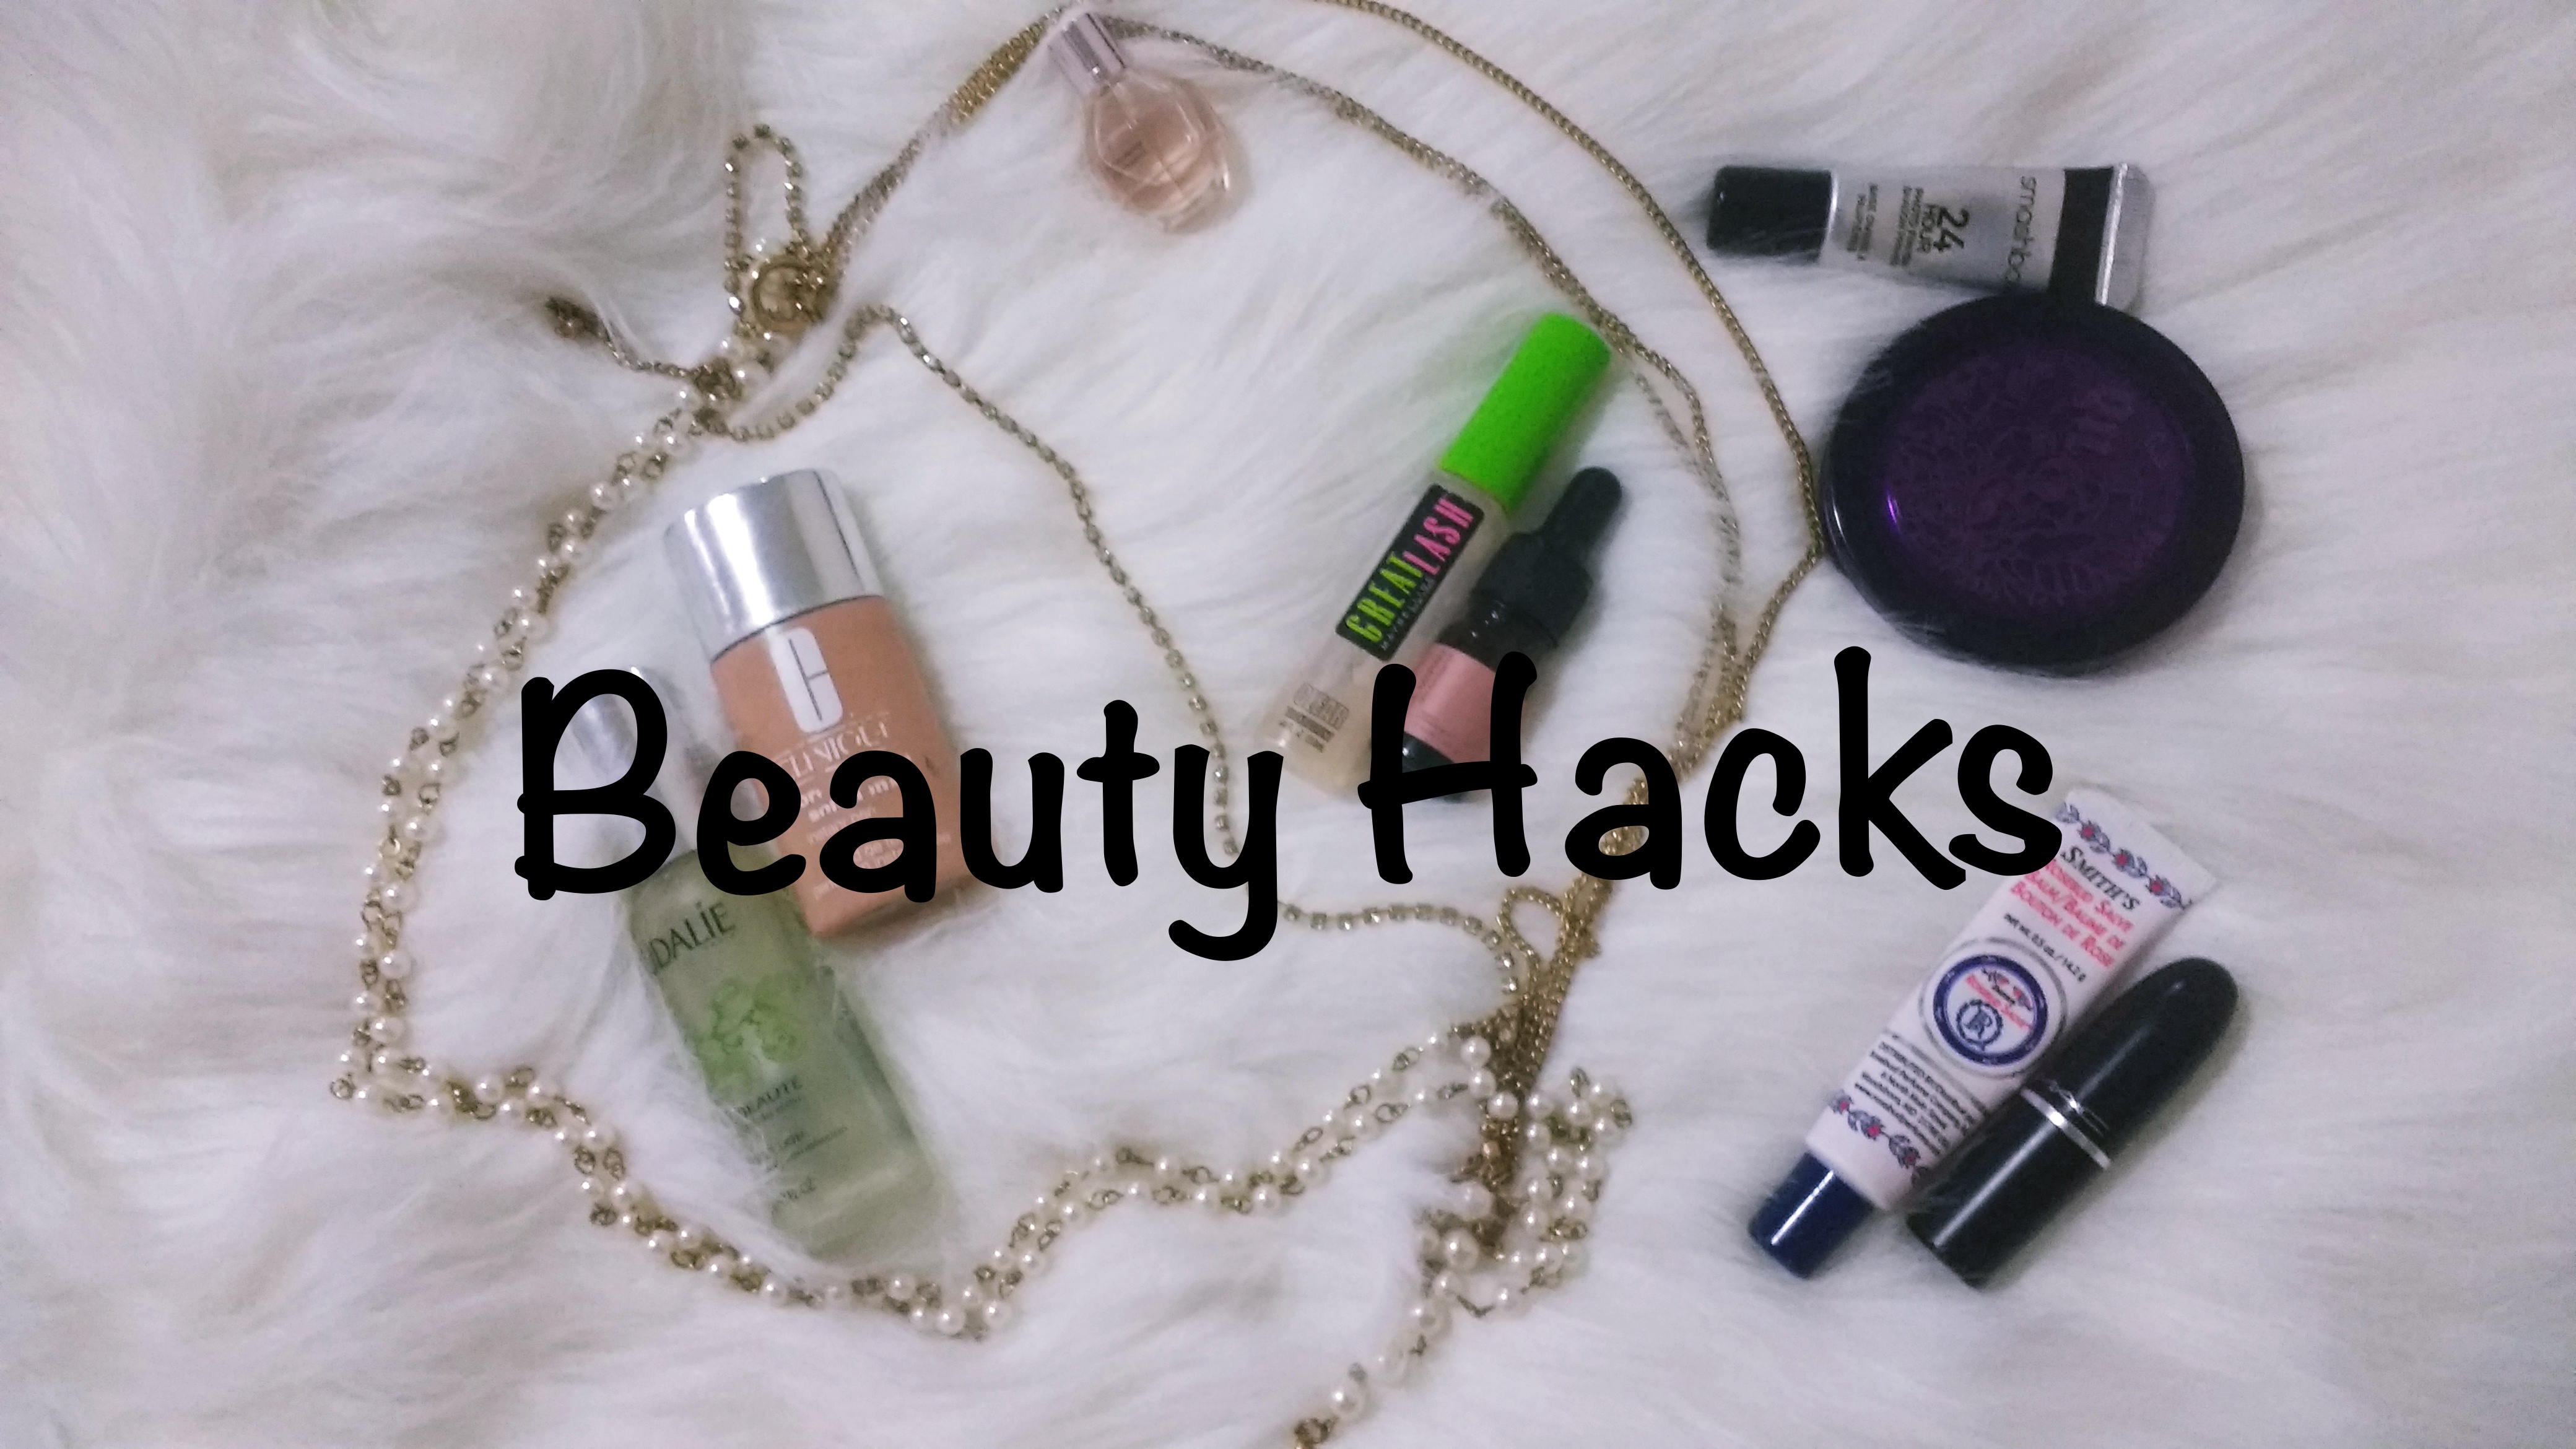 Beauty Hacks- get the looks you desire